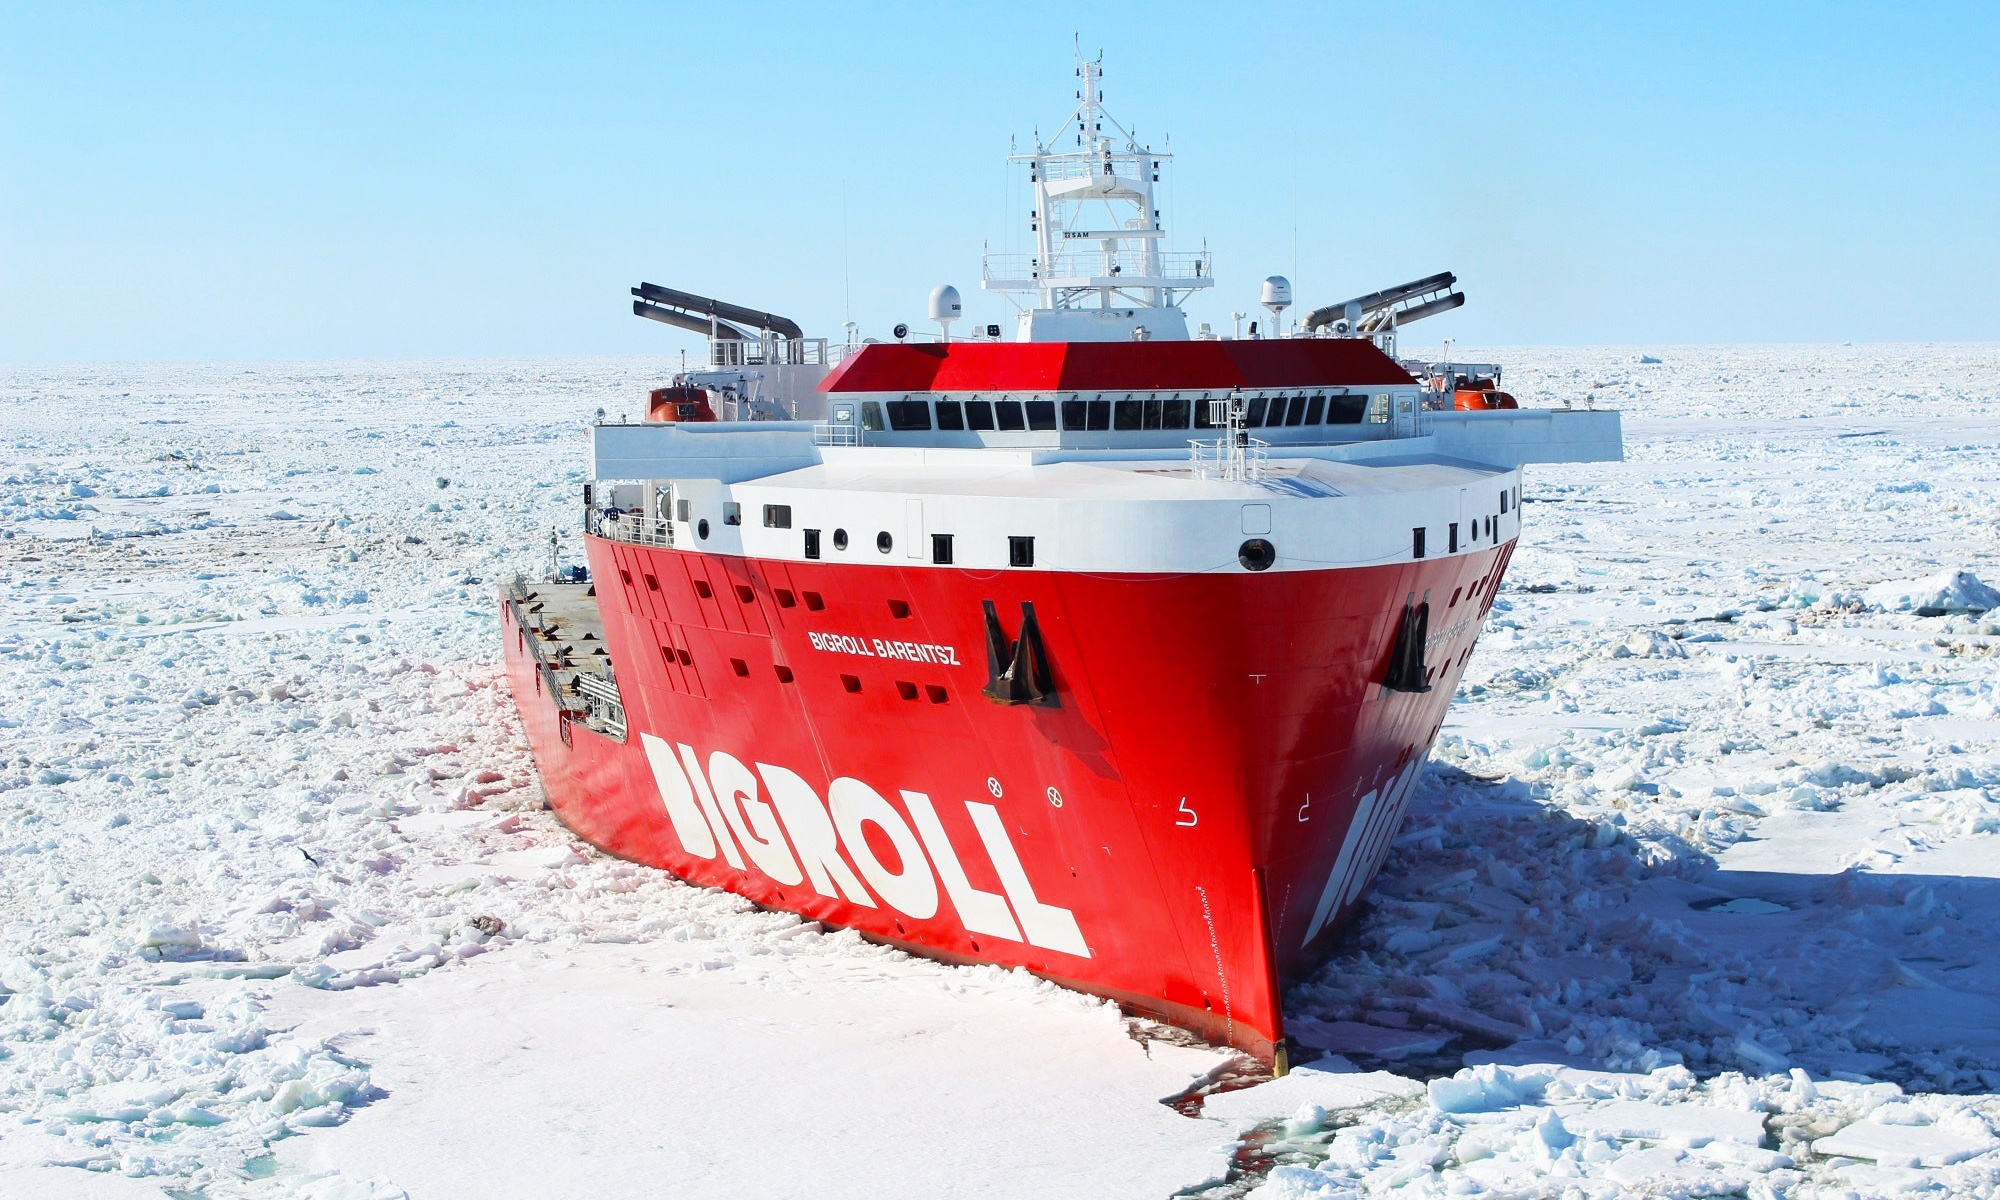 Arctic Bigroll Barentsz Ice Sea Ship 2000x1200